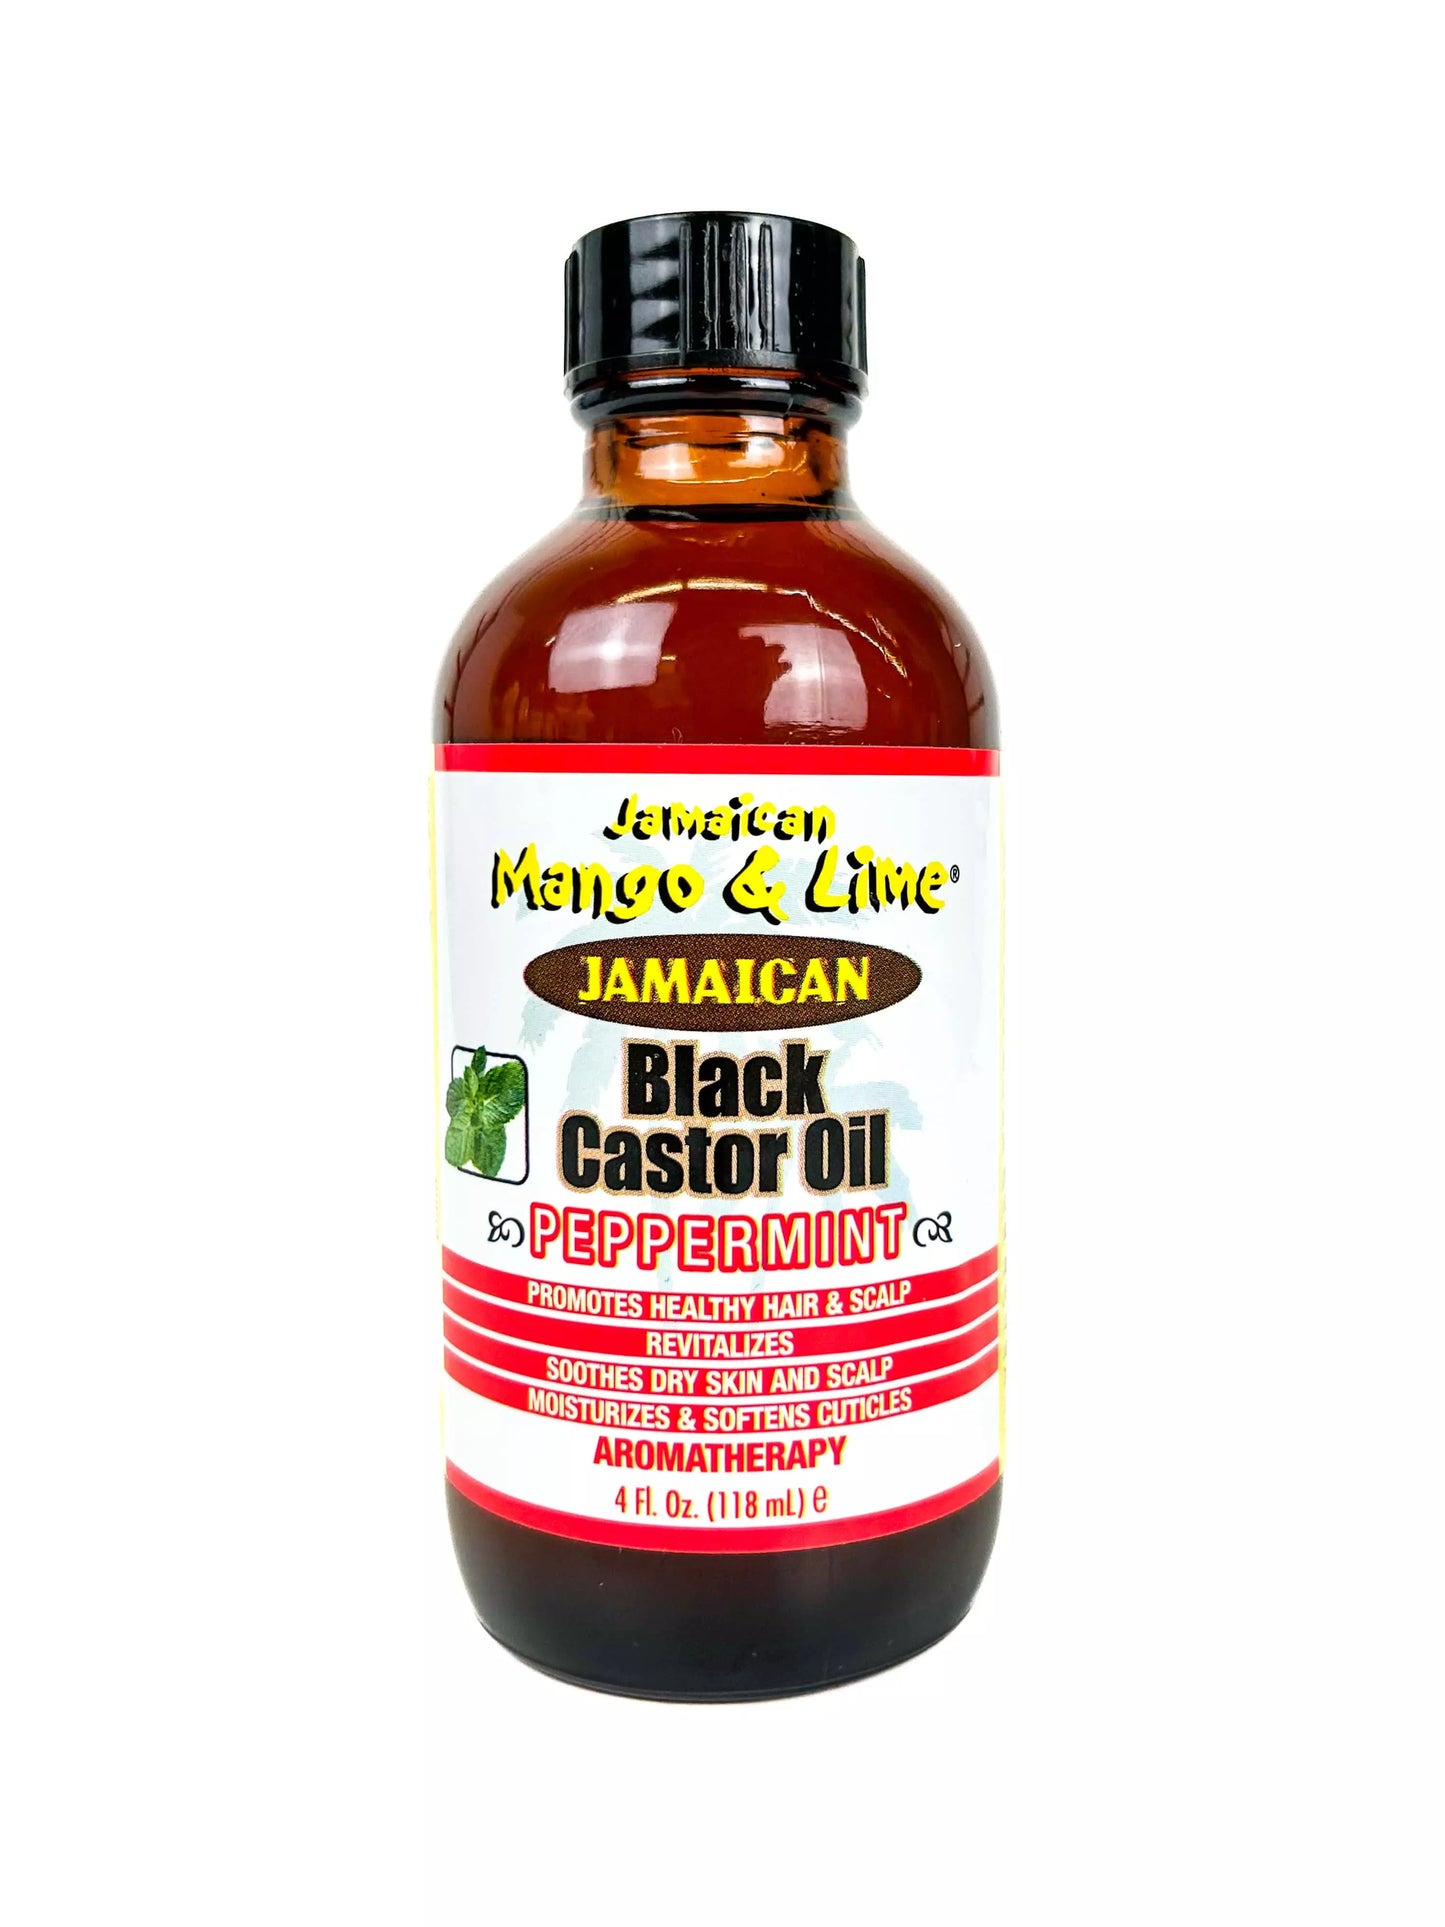 Jamaican Mango and Lime Black Castor Oil